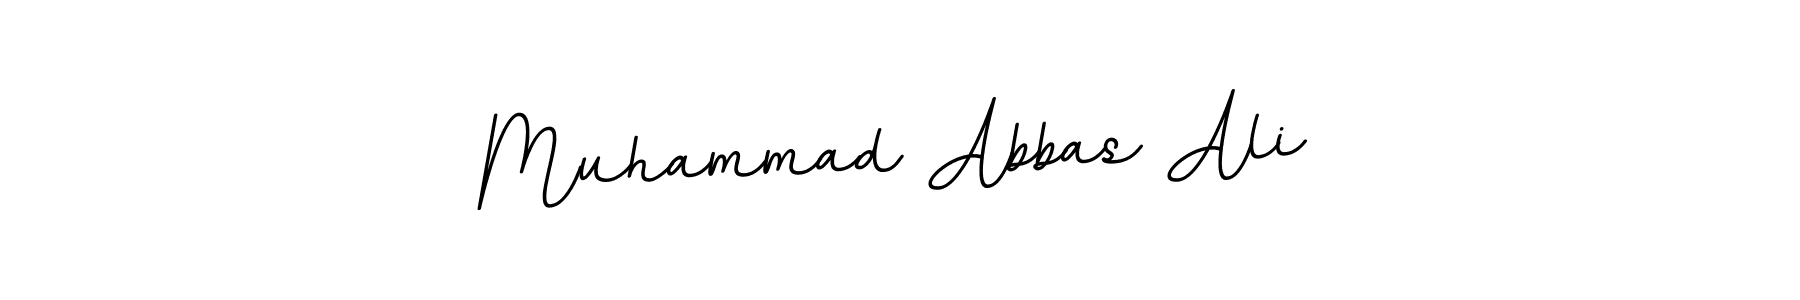 How to Draw Muhammad Abbas Ali signature style? BallpointsItalic-DORy9 is a latest design signature styles for name Muhammad Abbas Ali. Muhammad Abbas Ali signature style 11 images and pictures png